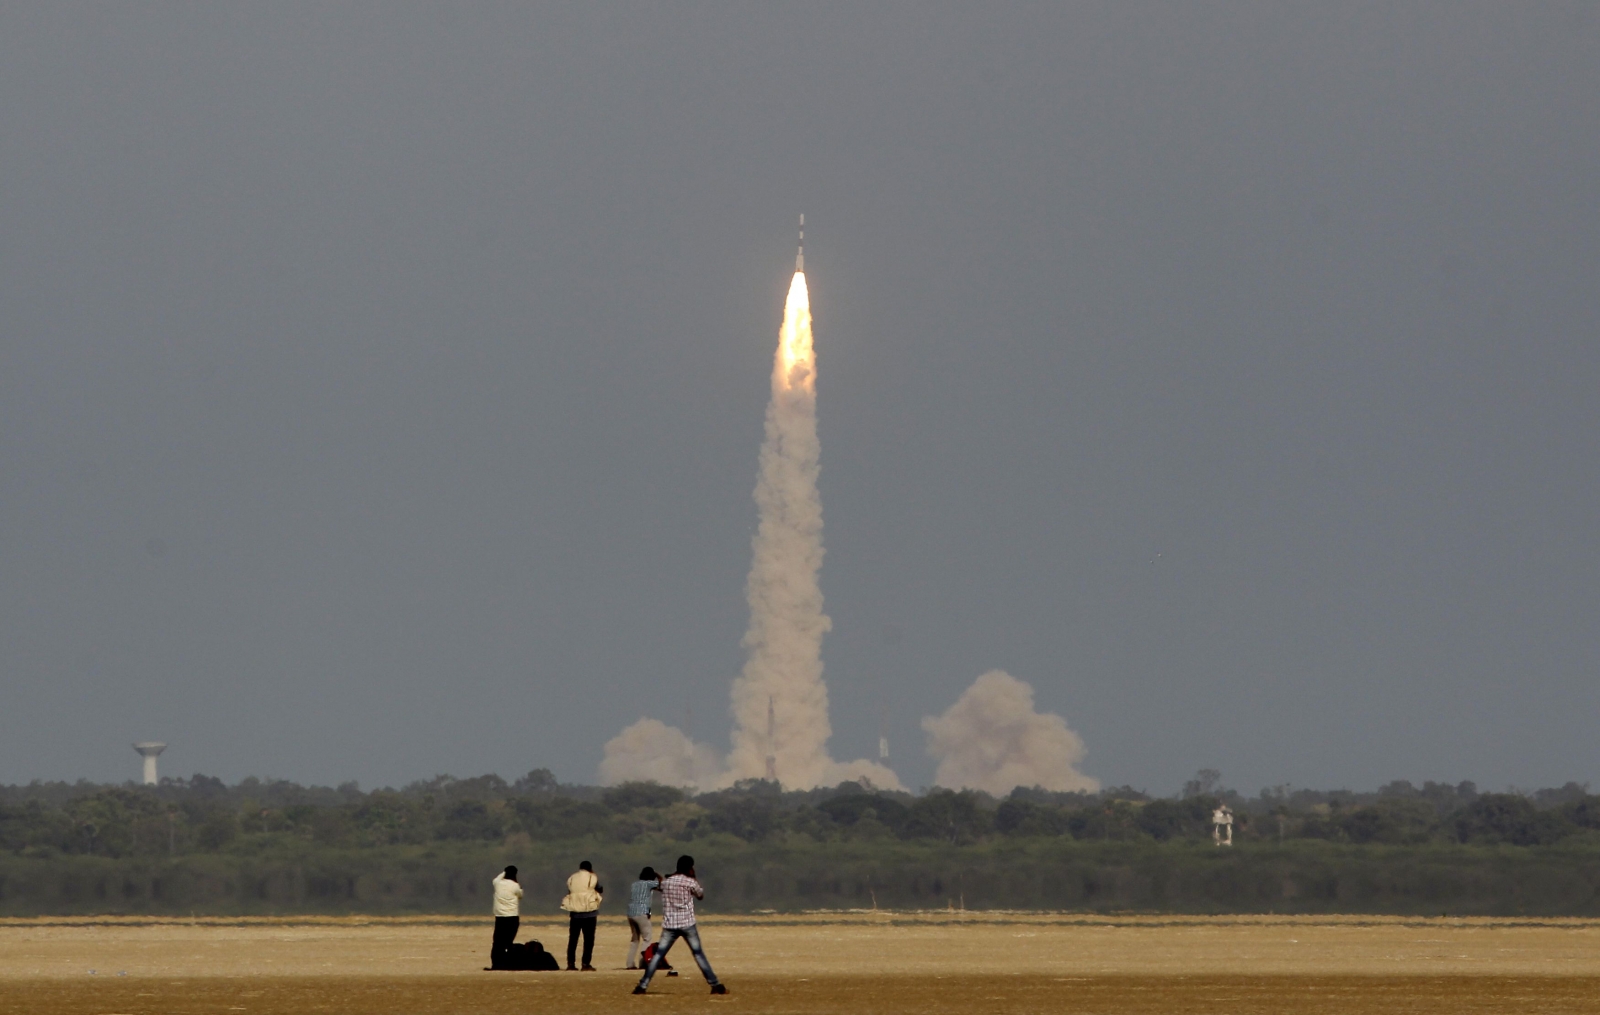 Live launch today. Перевозка первого индийского спутника. Launch 22. Индийского корабля Gaganyaan.